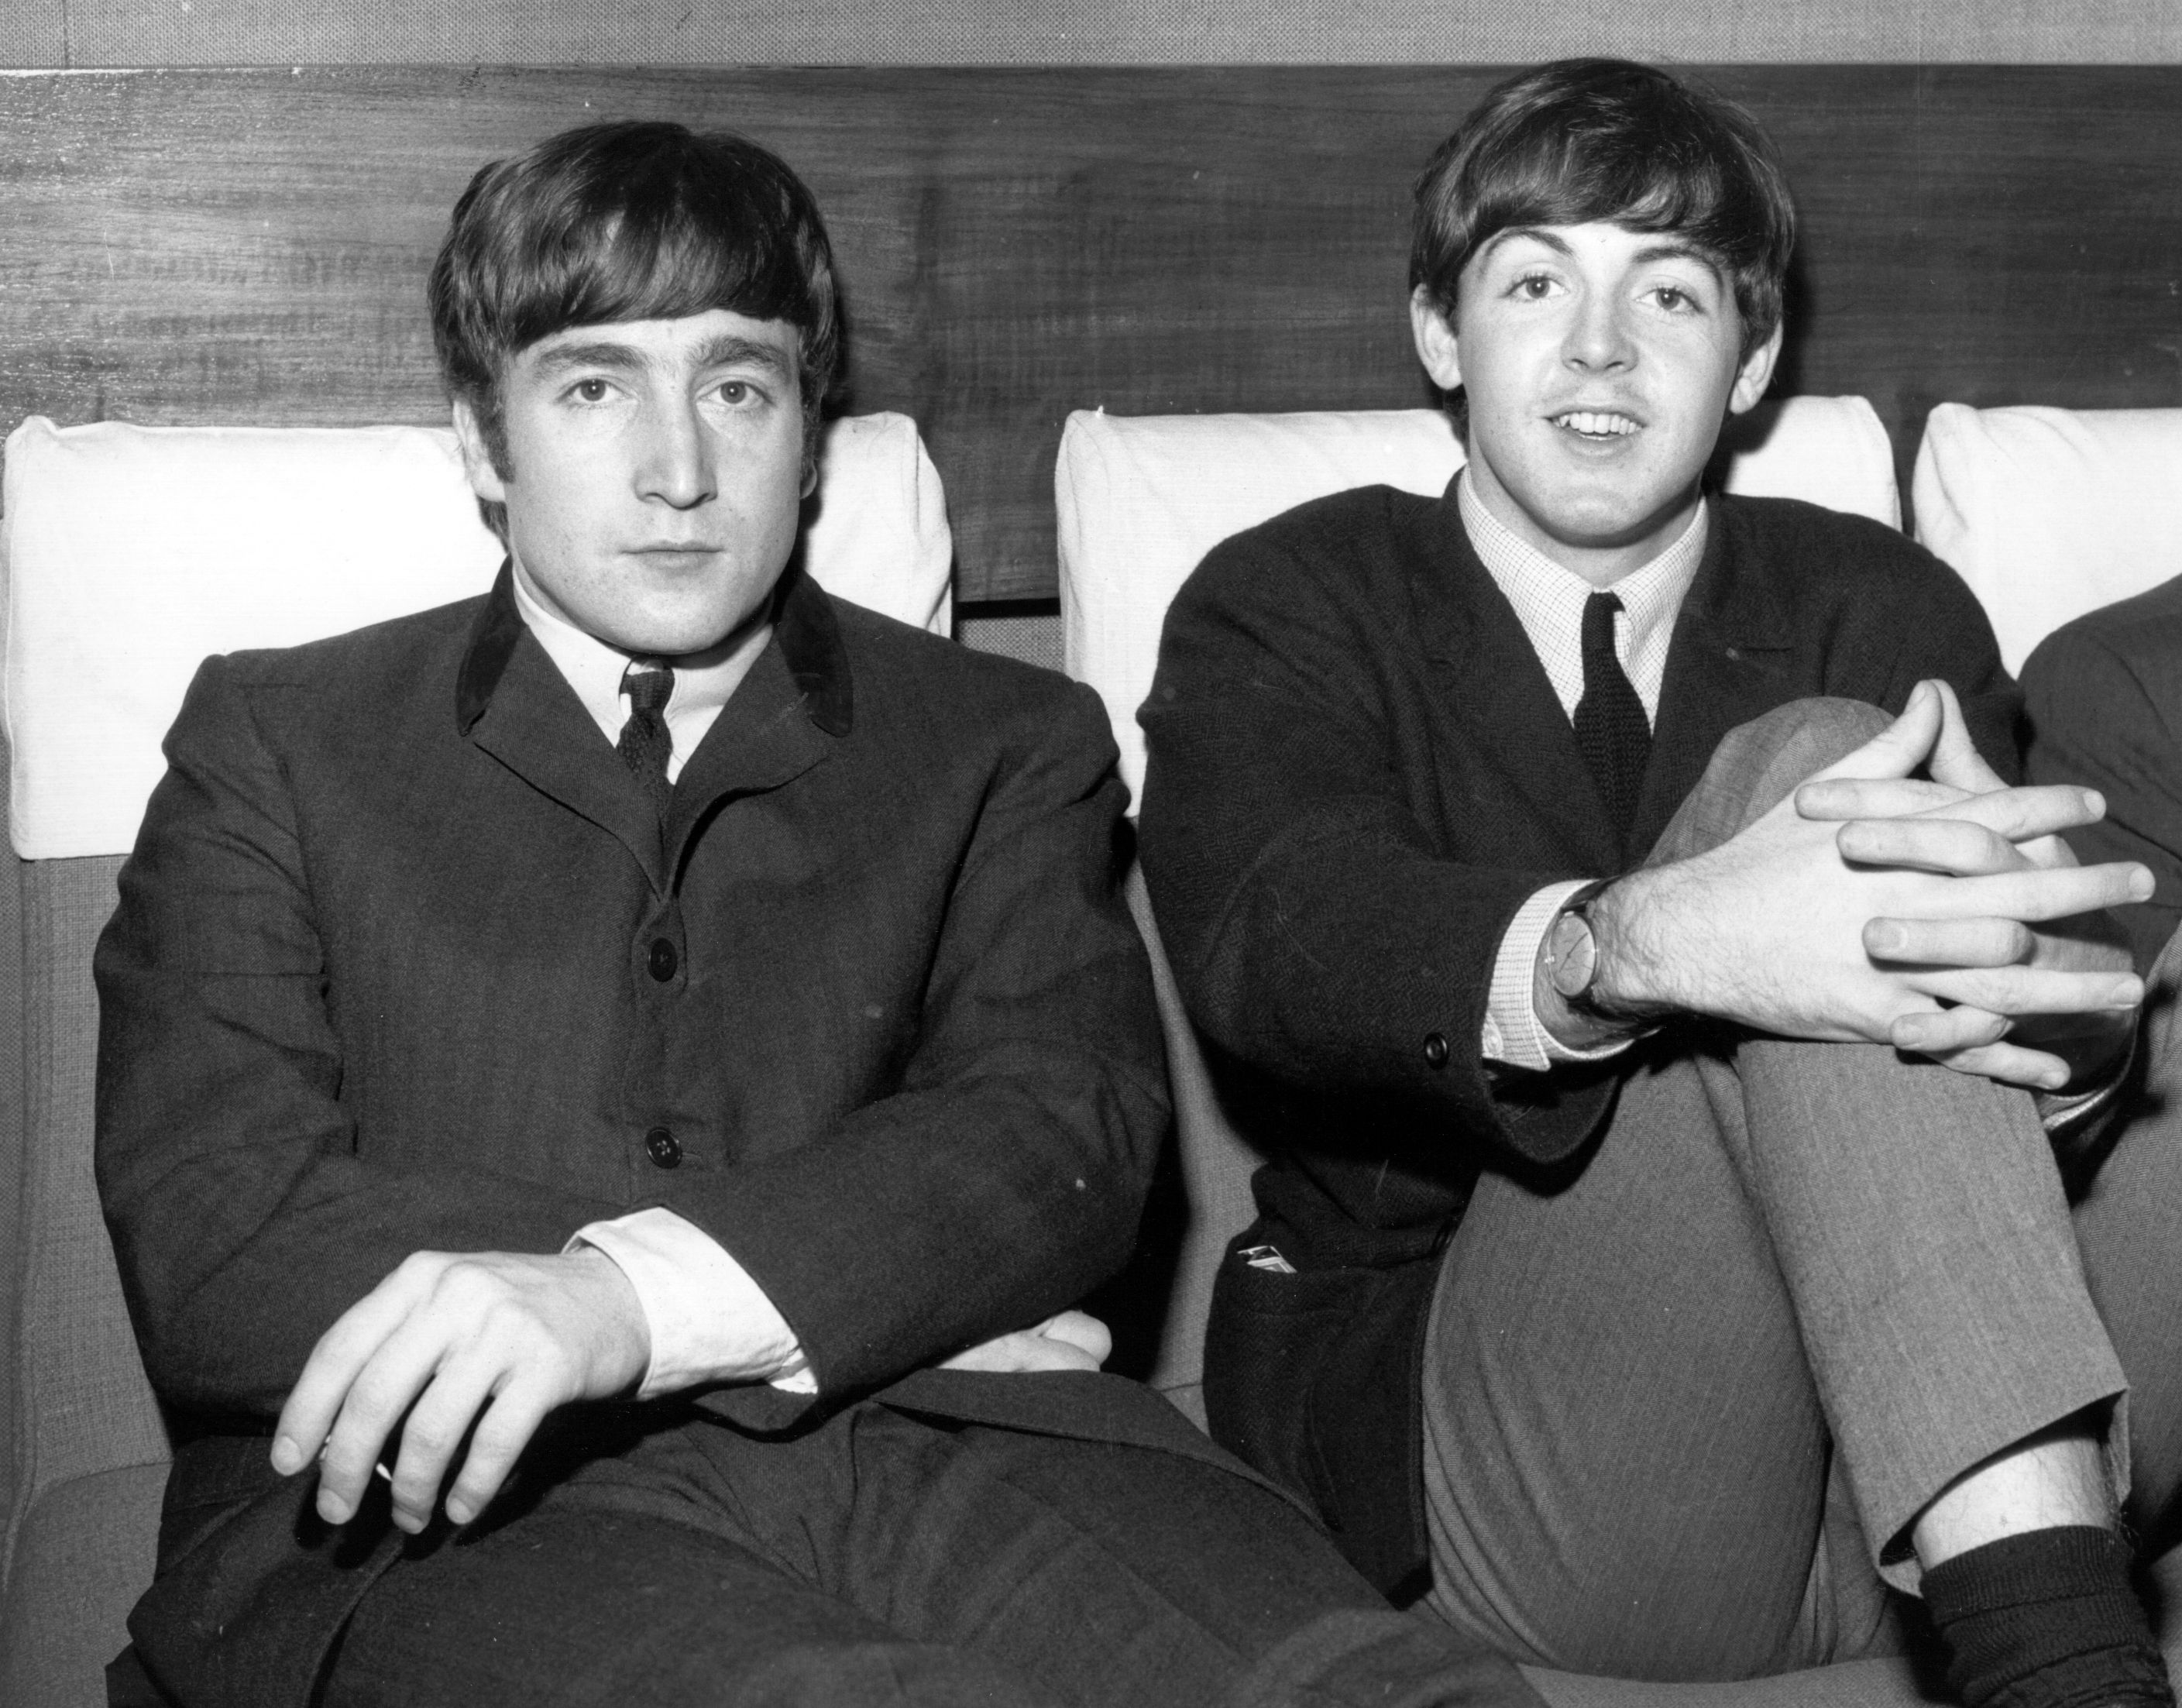 The Beatles' John Lennon and Paul McCartney wearing suits